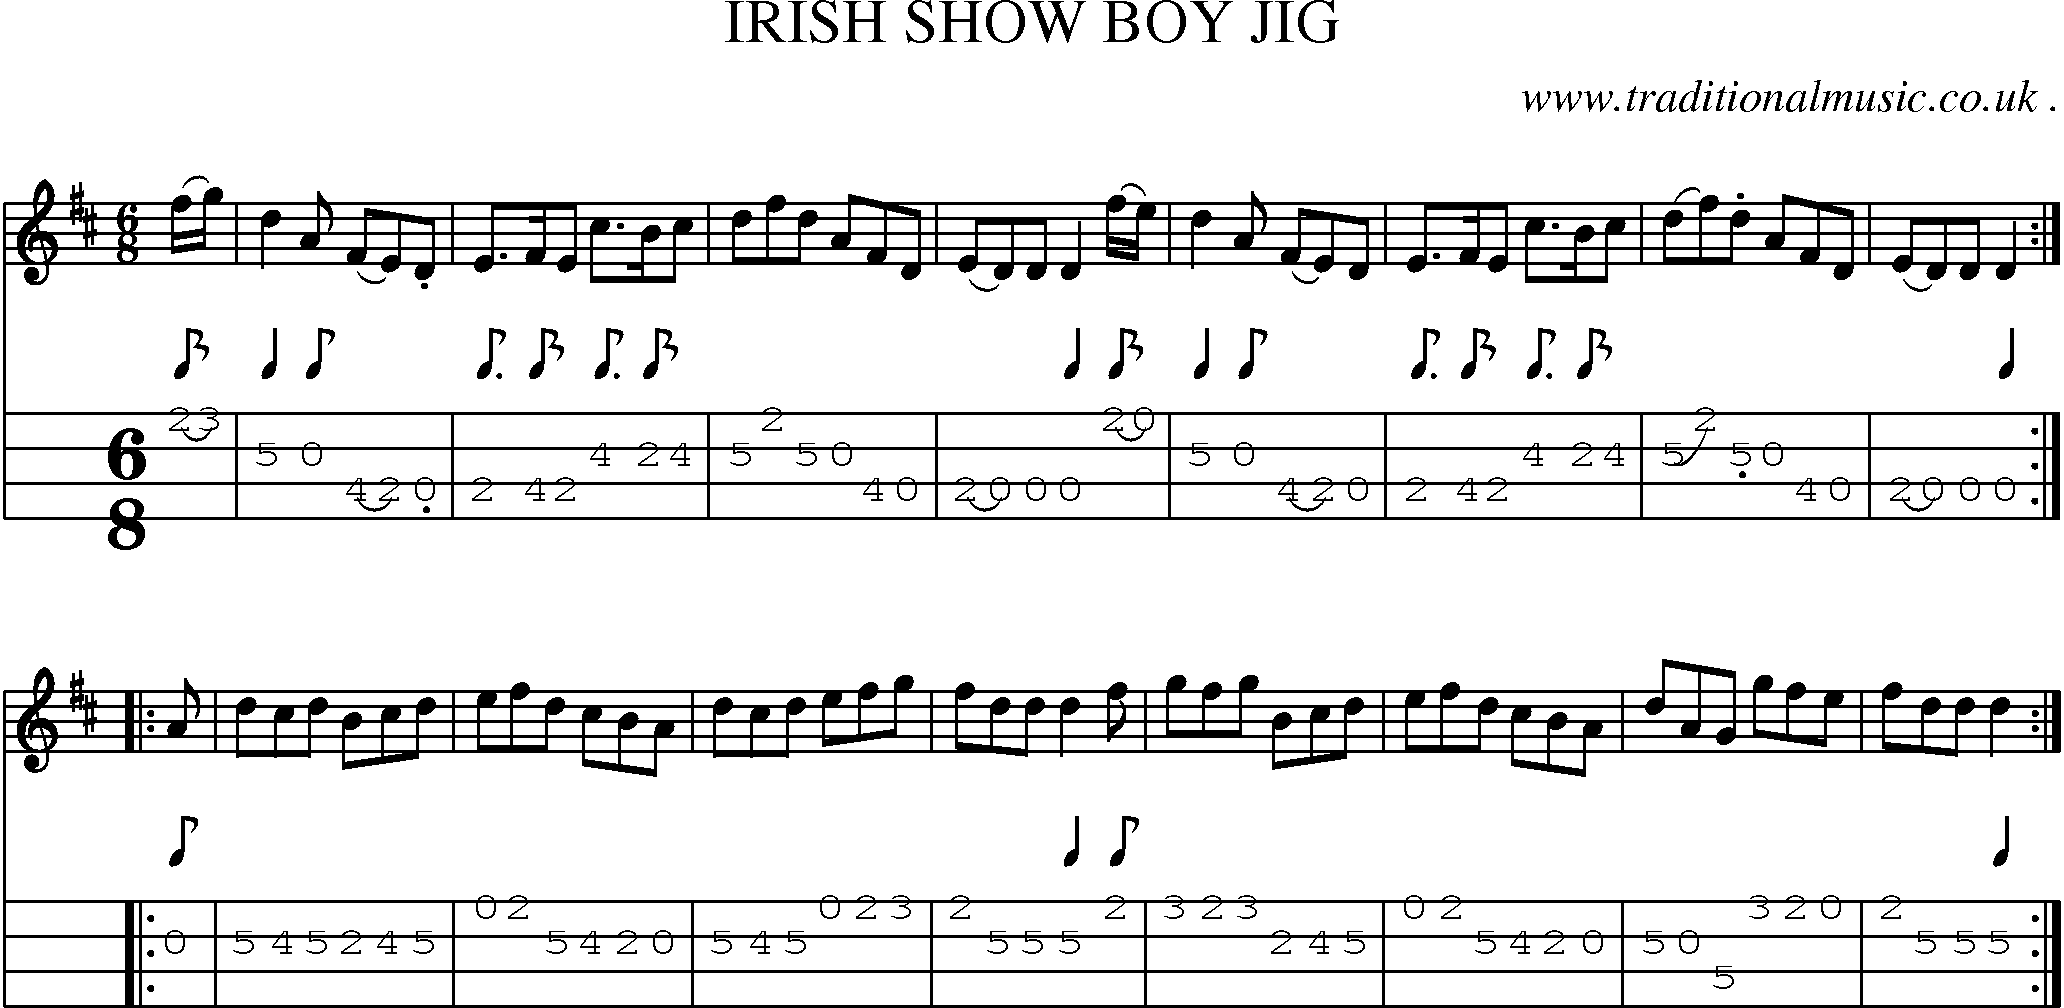 Sheet-Music and Mandolin Tabs for Irish Show Boy Jig